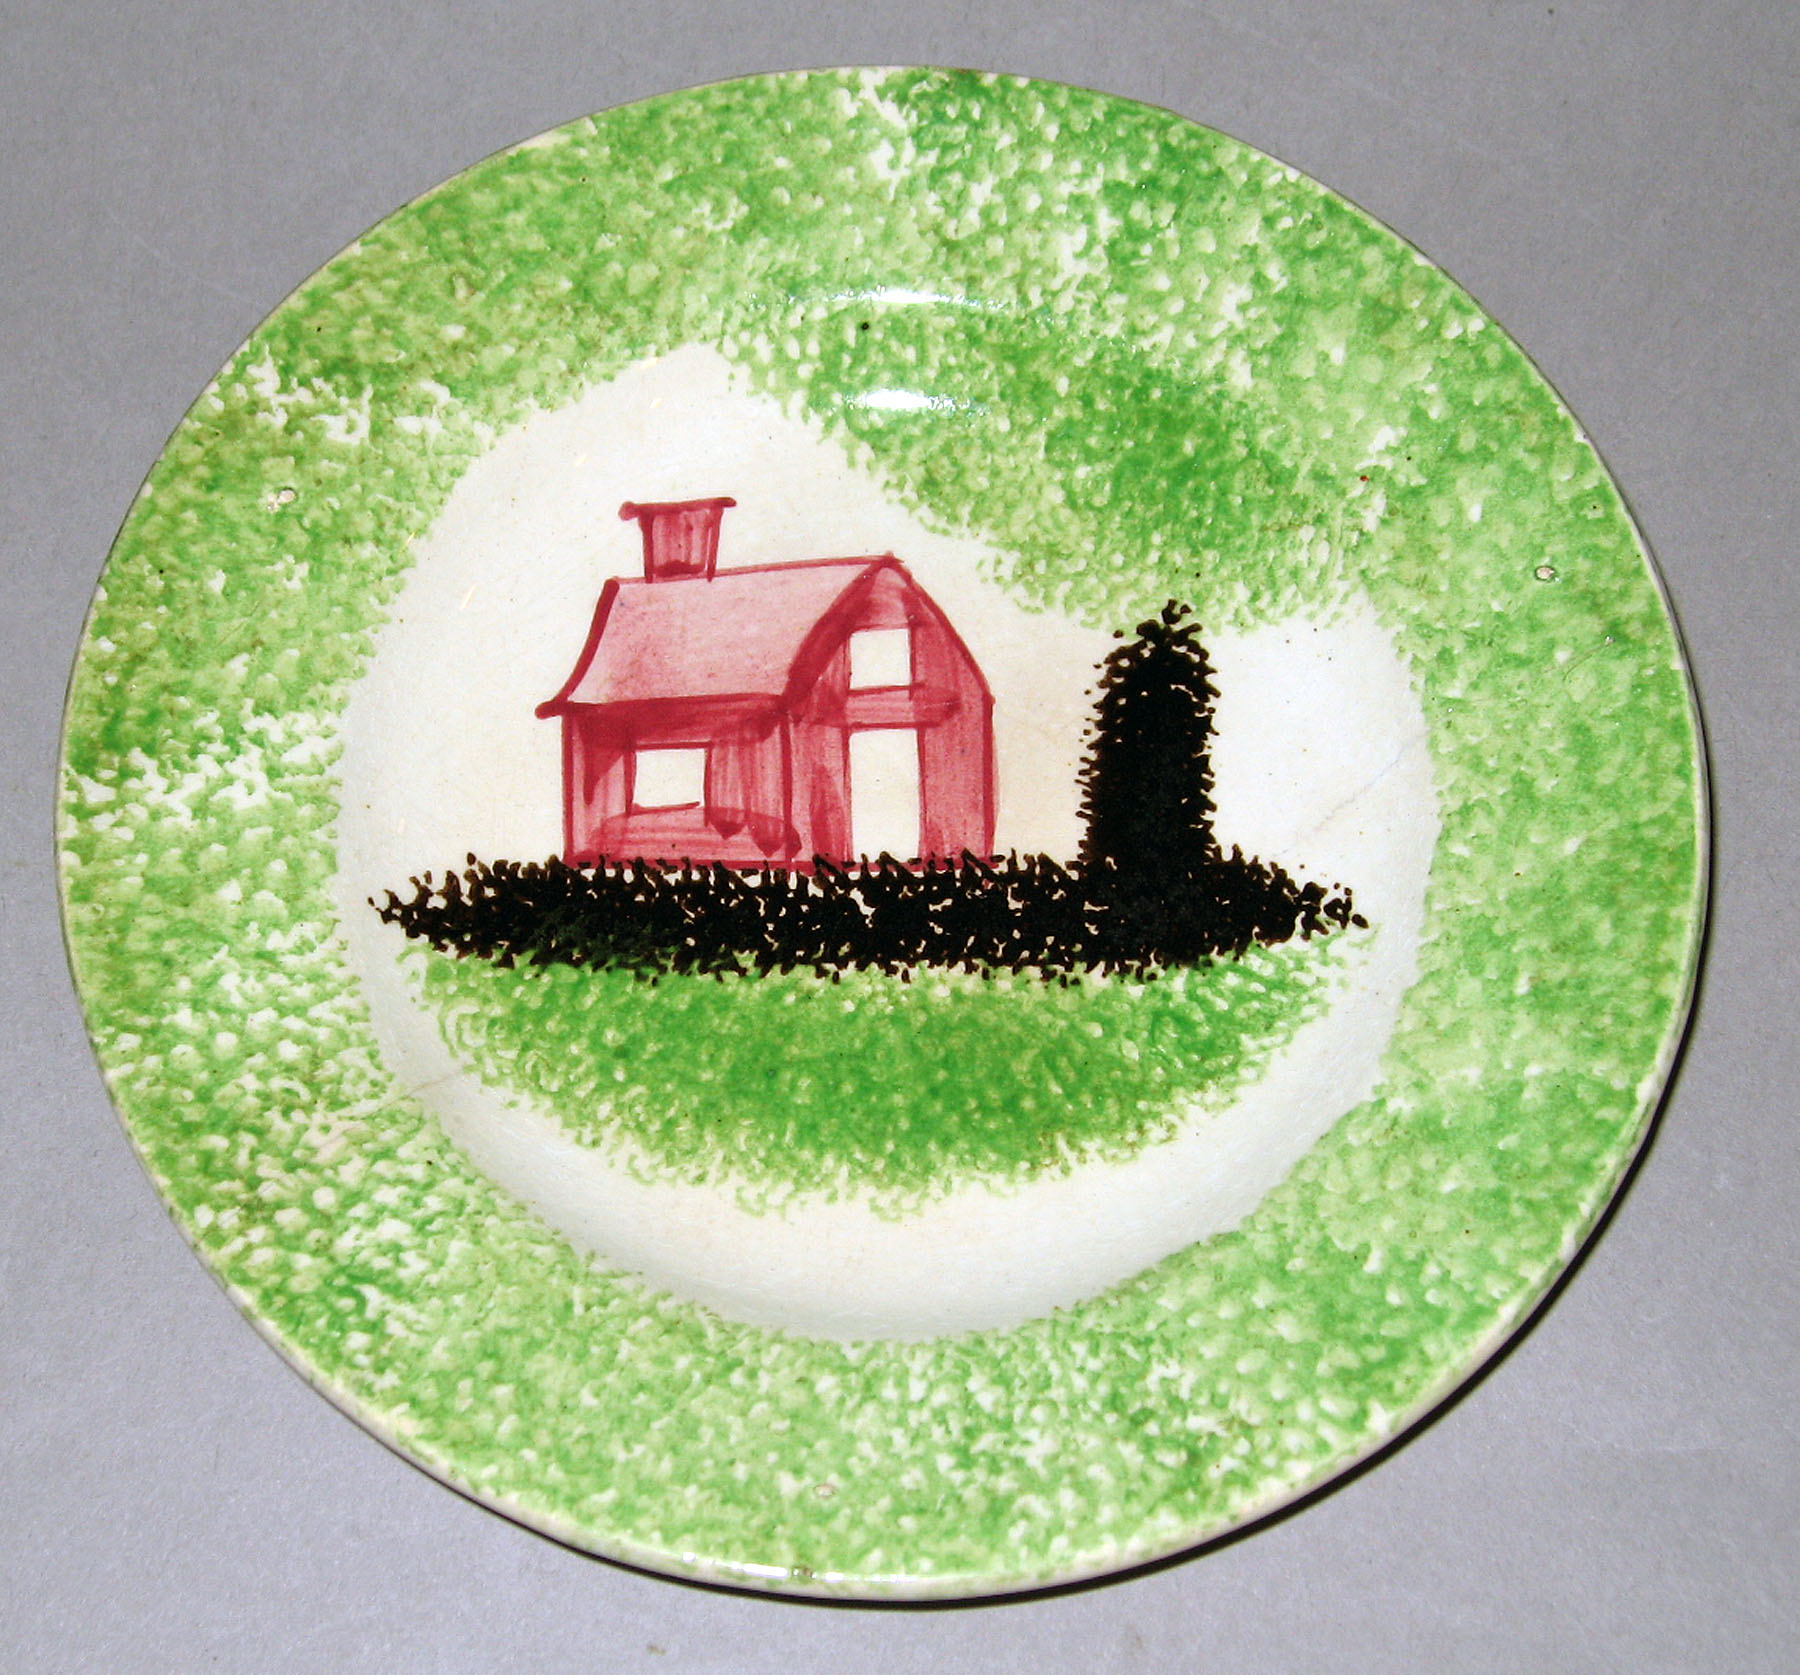 1965.0785.001 Spatterware plate